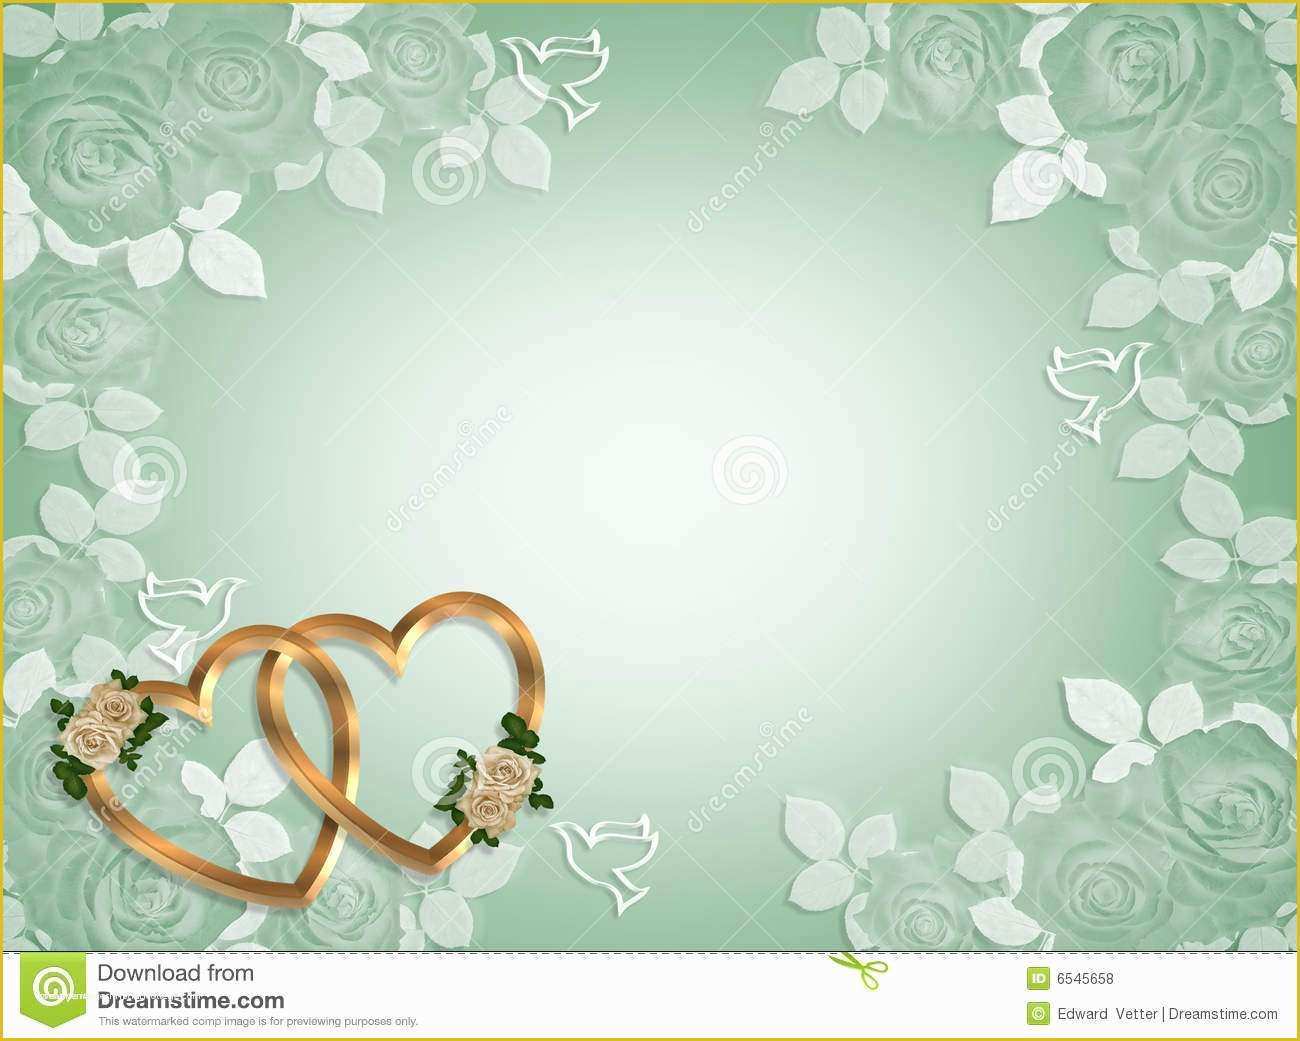 Free Printable Wedding Invitations Templates Downloads Of Wedding Invitation Background Designs Free Luxury